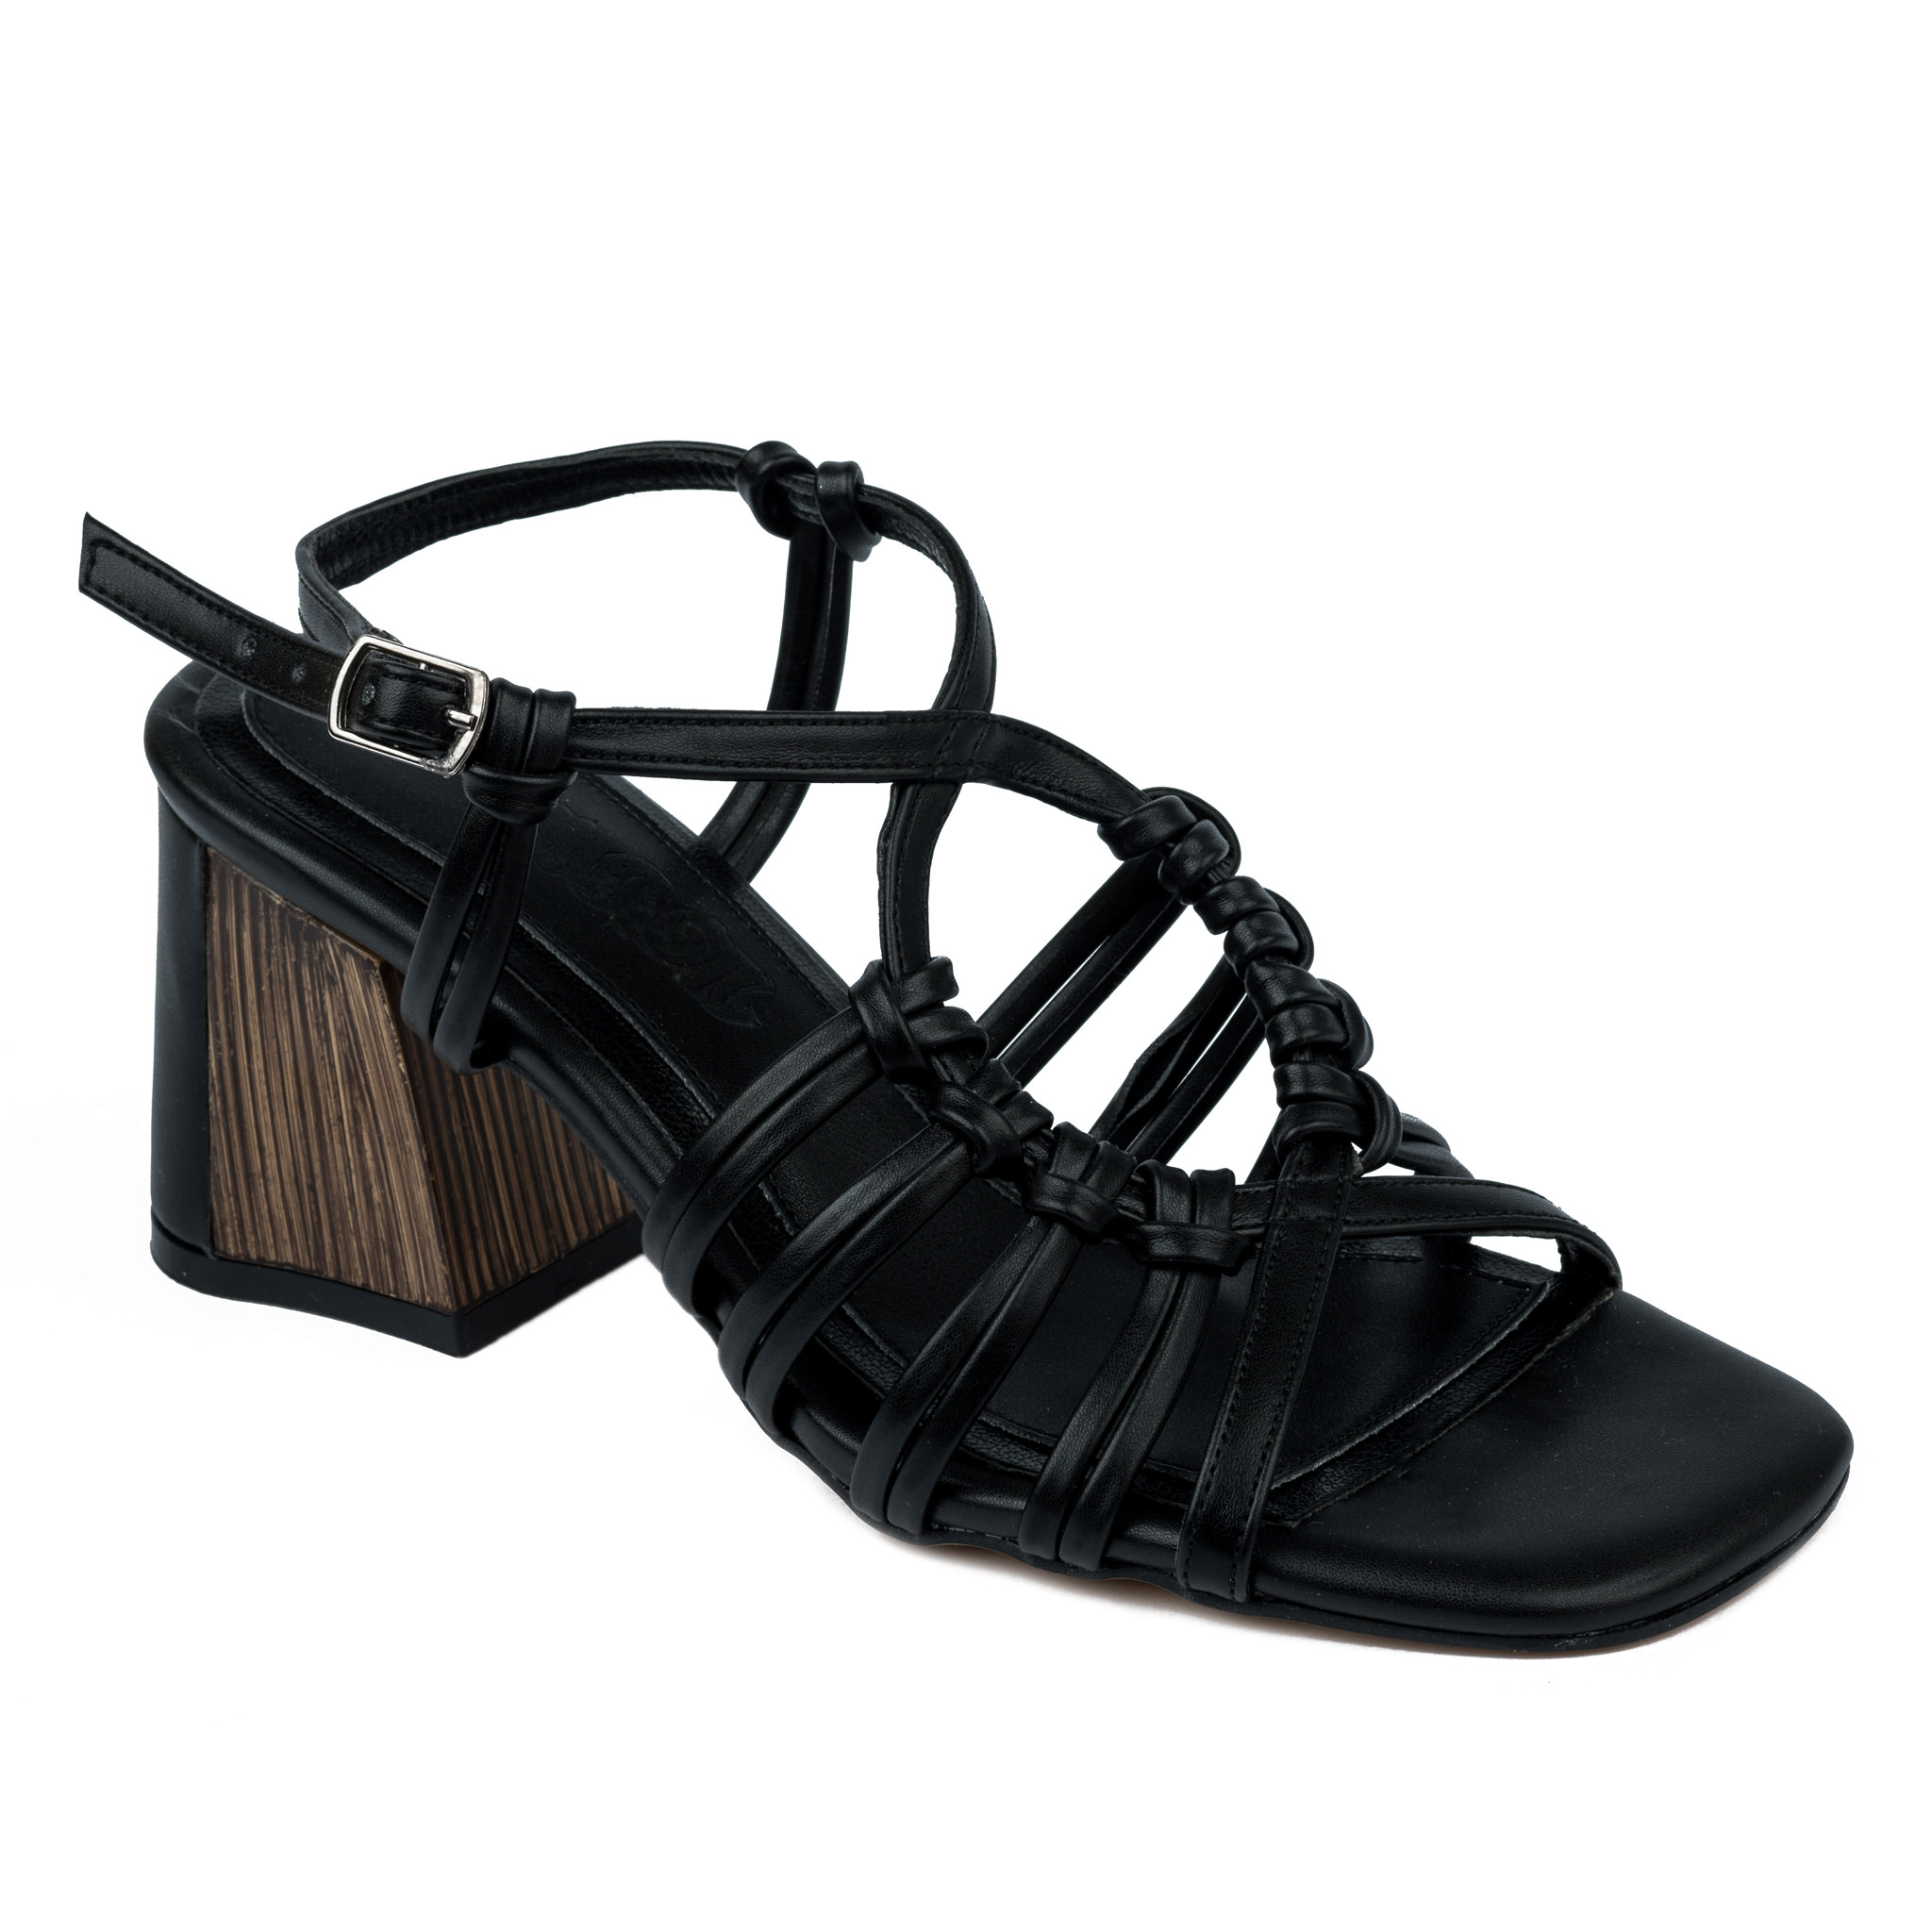 Women sandals A611 - BLACK